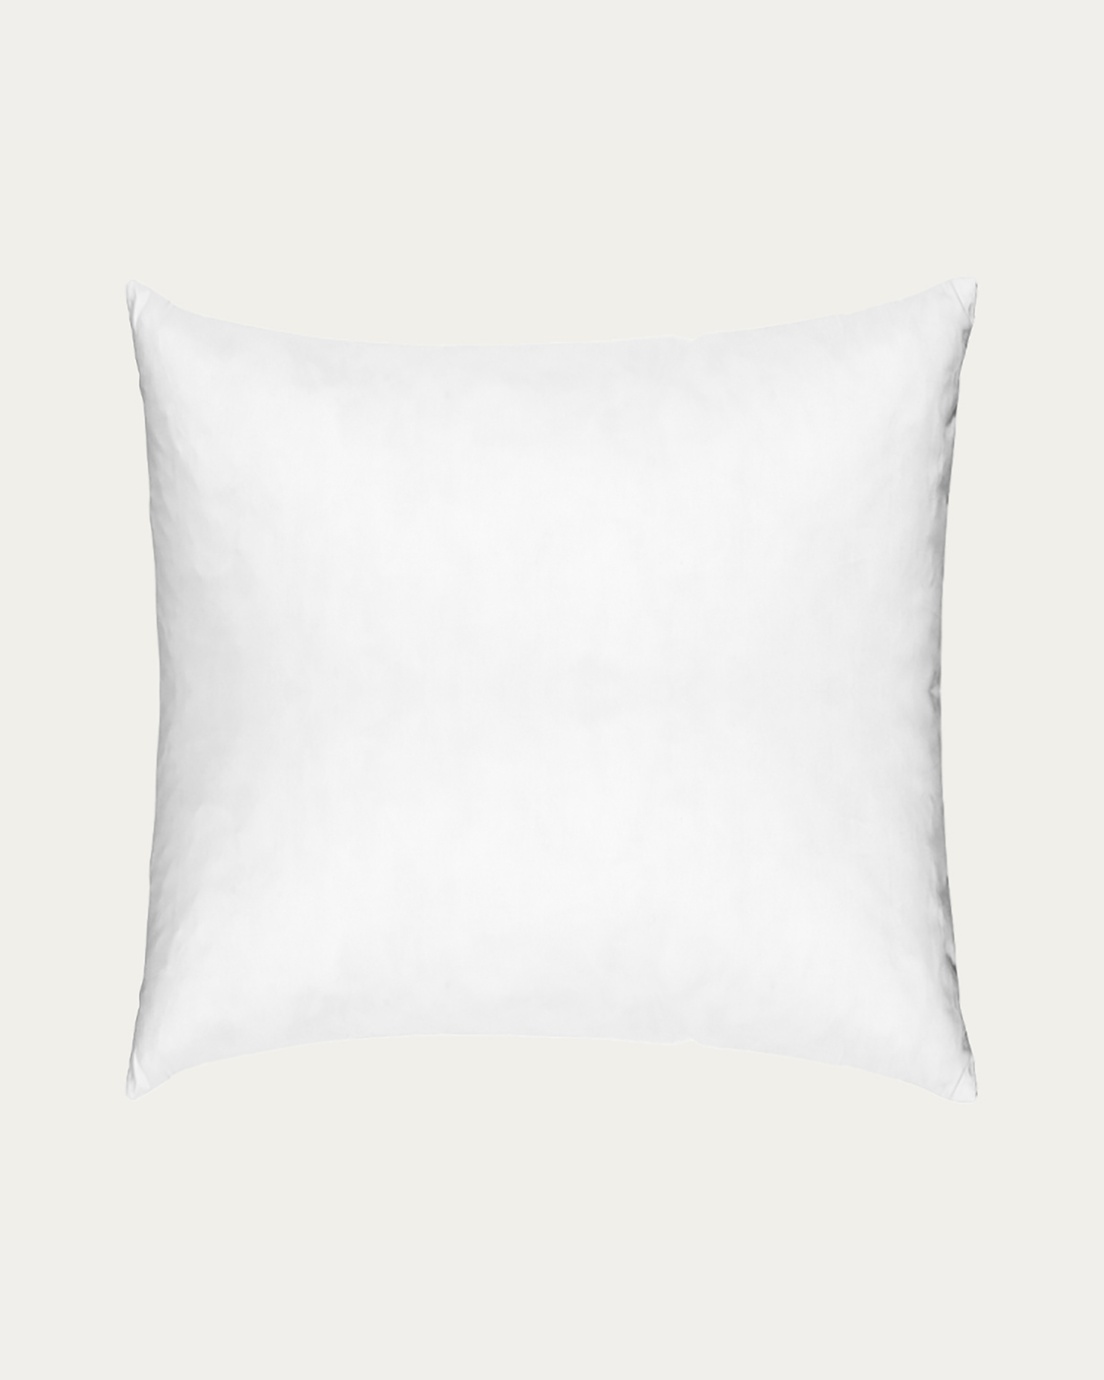 SYNTHETIC cuscino interno bianco 50x50 cm